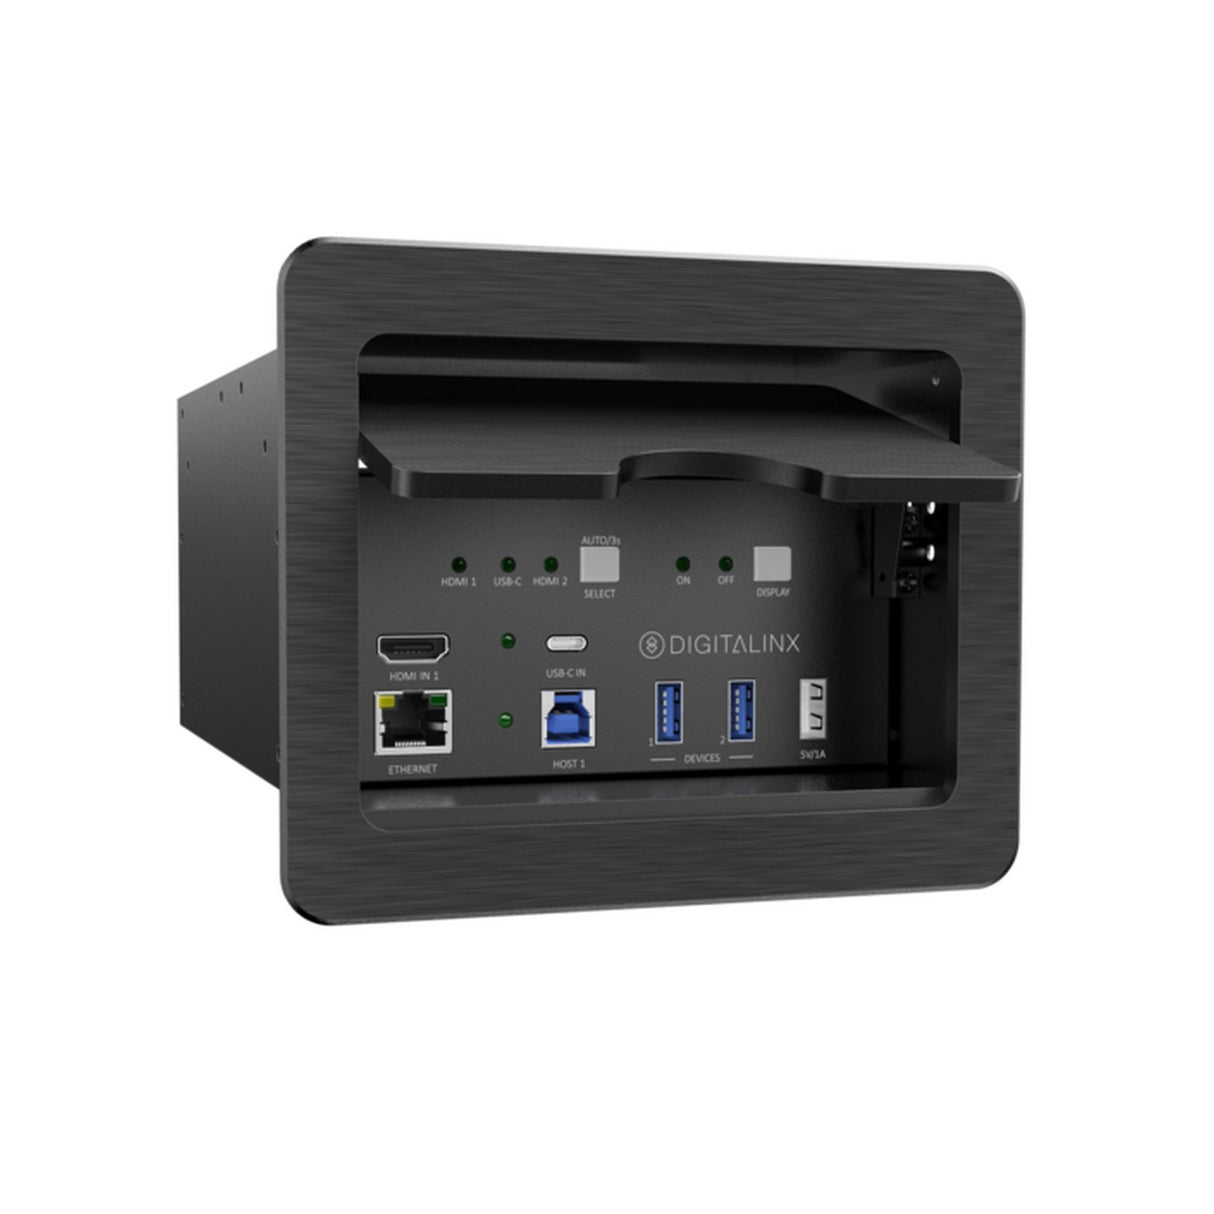 Digitalinx DL-SC31U-BX 3 x 1 Soft Codec Series Multi-Format Table Box Presentation Switcher